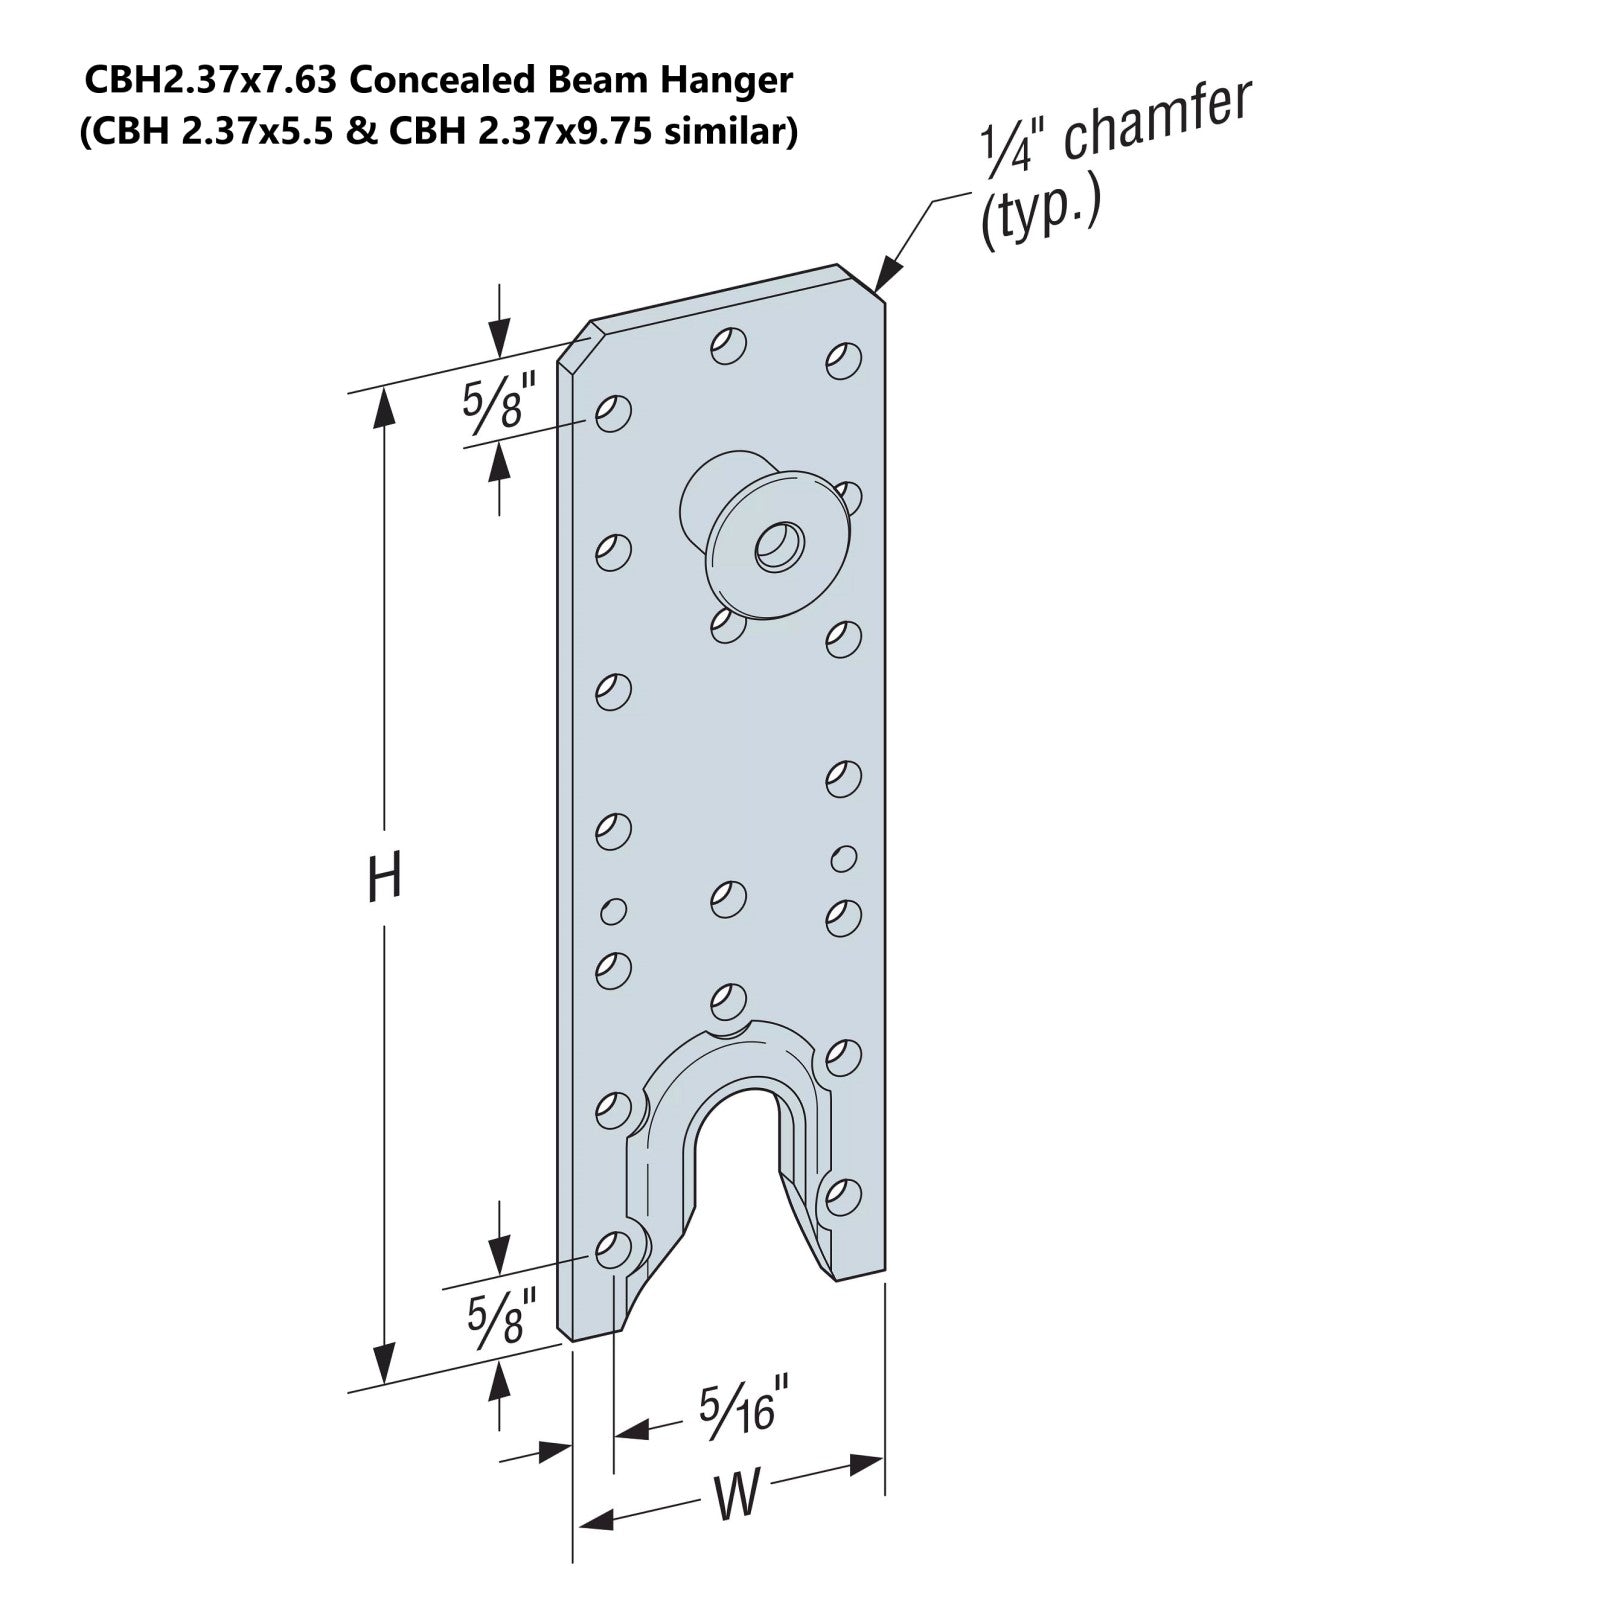 CBH2.37x7.63 Concealed Beam Hanger Illustration (CBH 2.37x5.5 & CBH 2.37x9.75 similar)